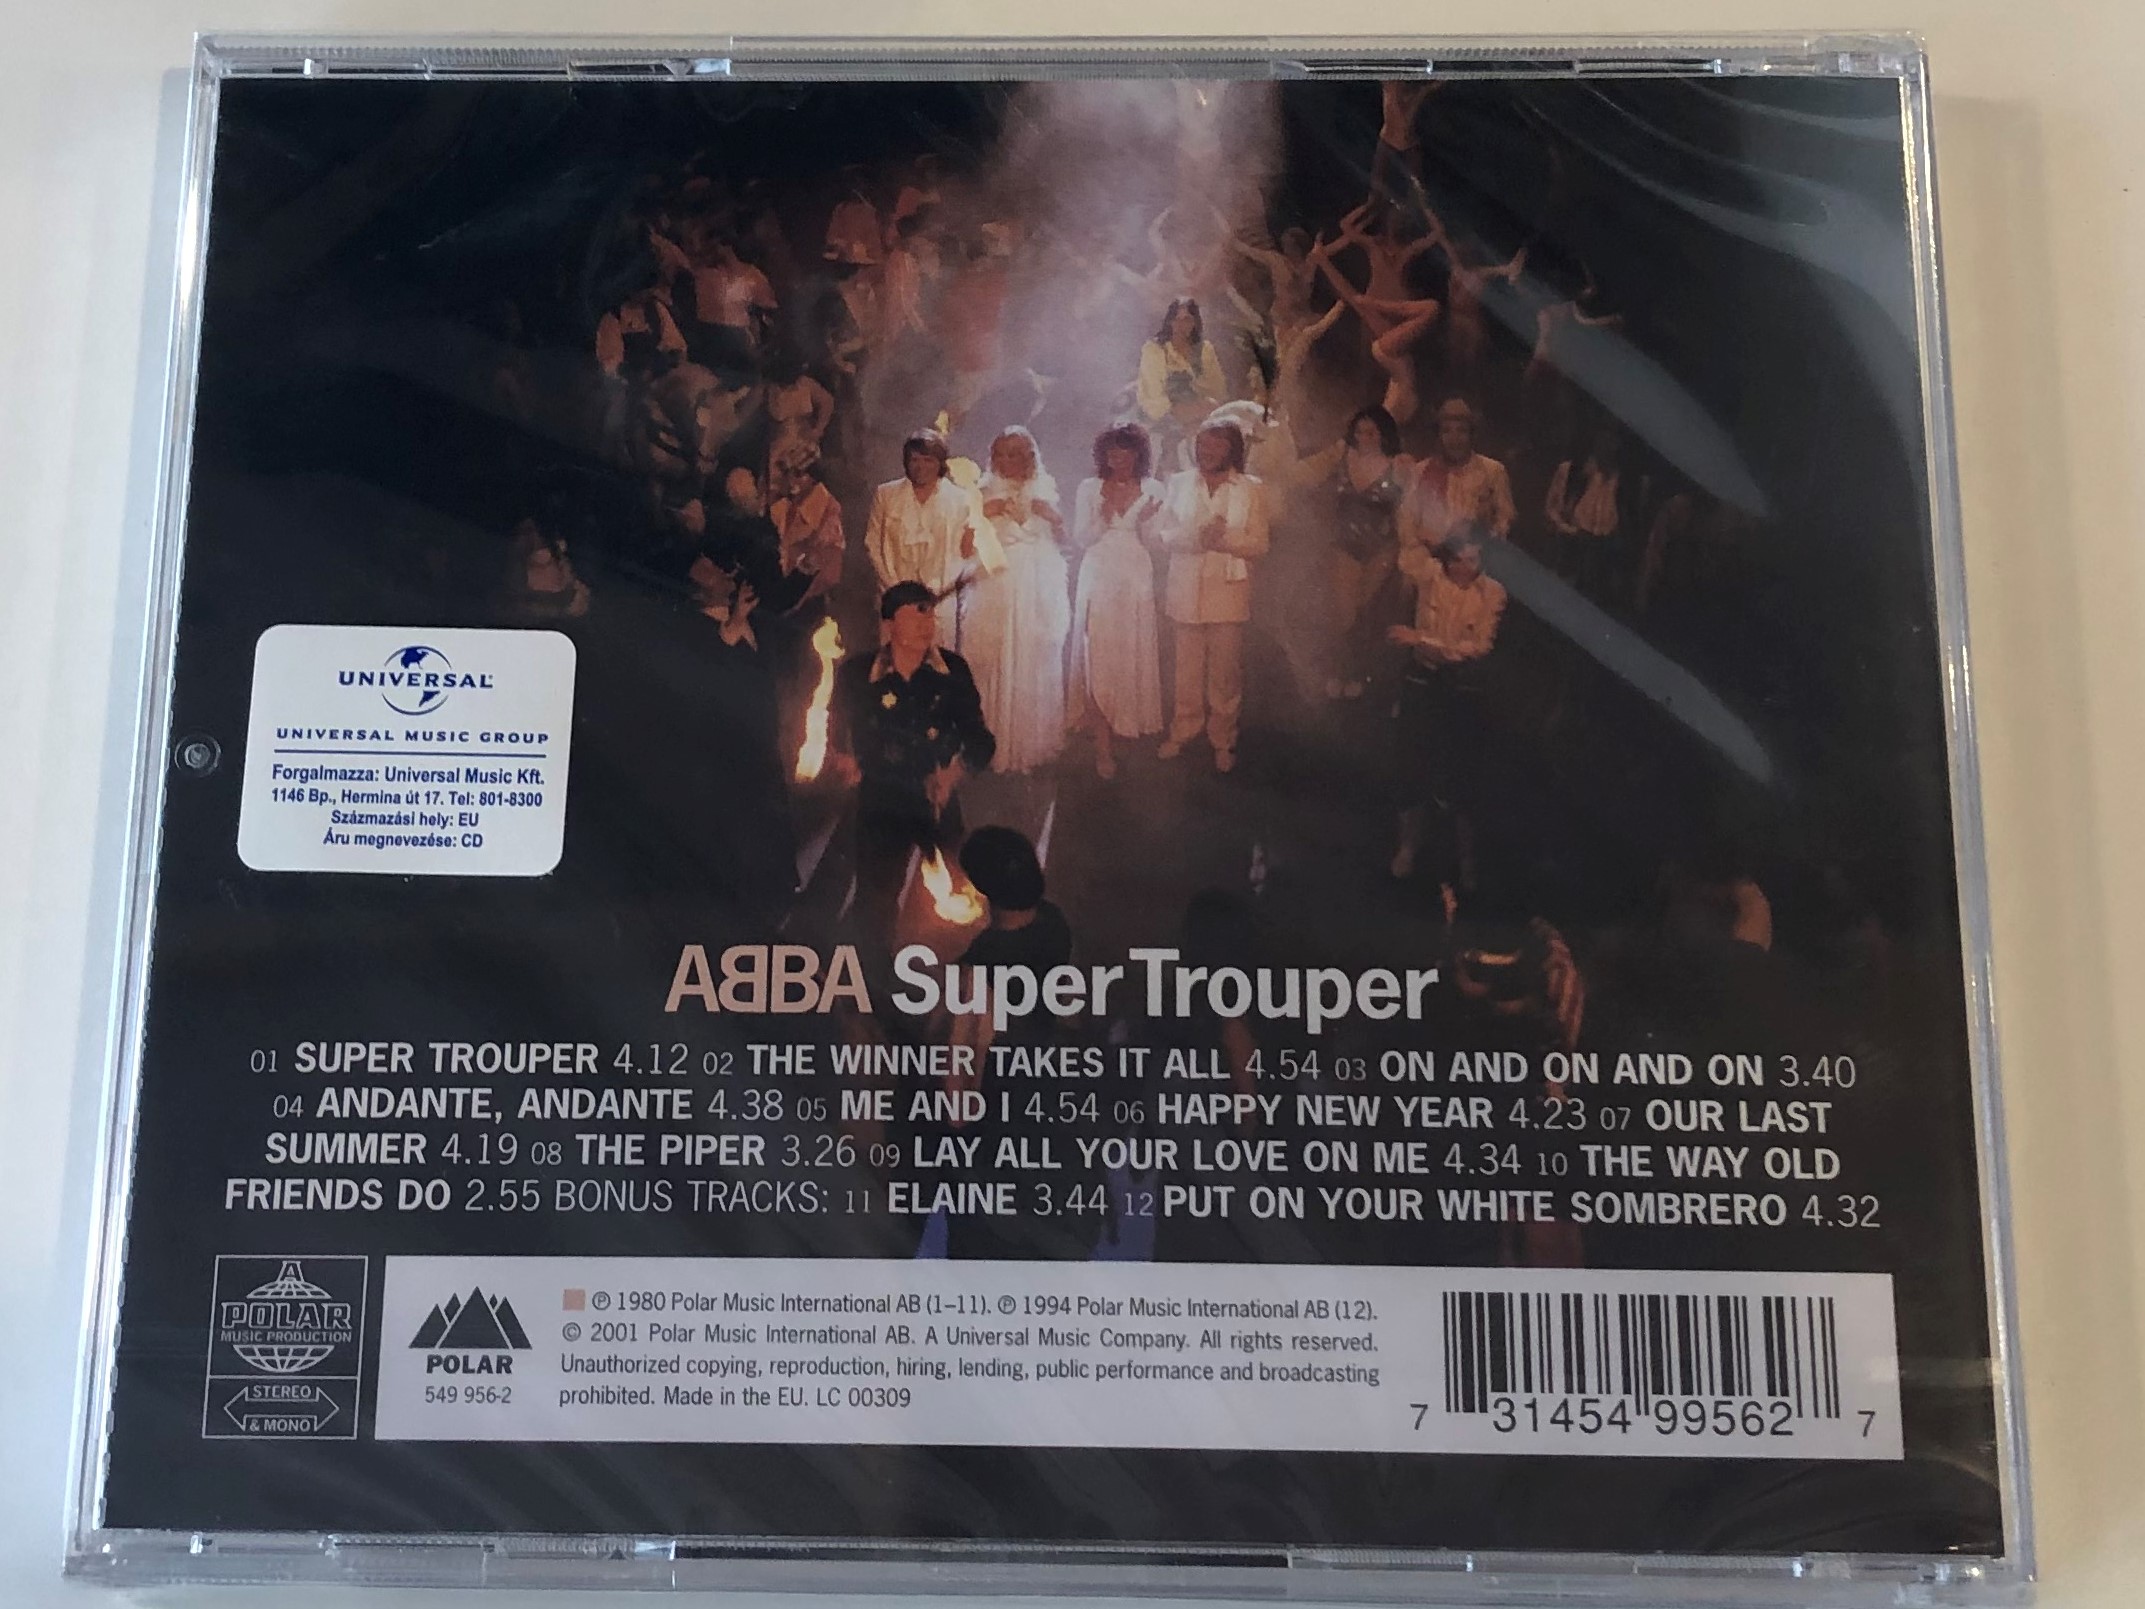 abba-super-trouper-polar-audio-cd-2001-549-956-2-2-.jpg